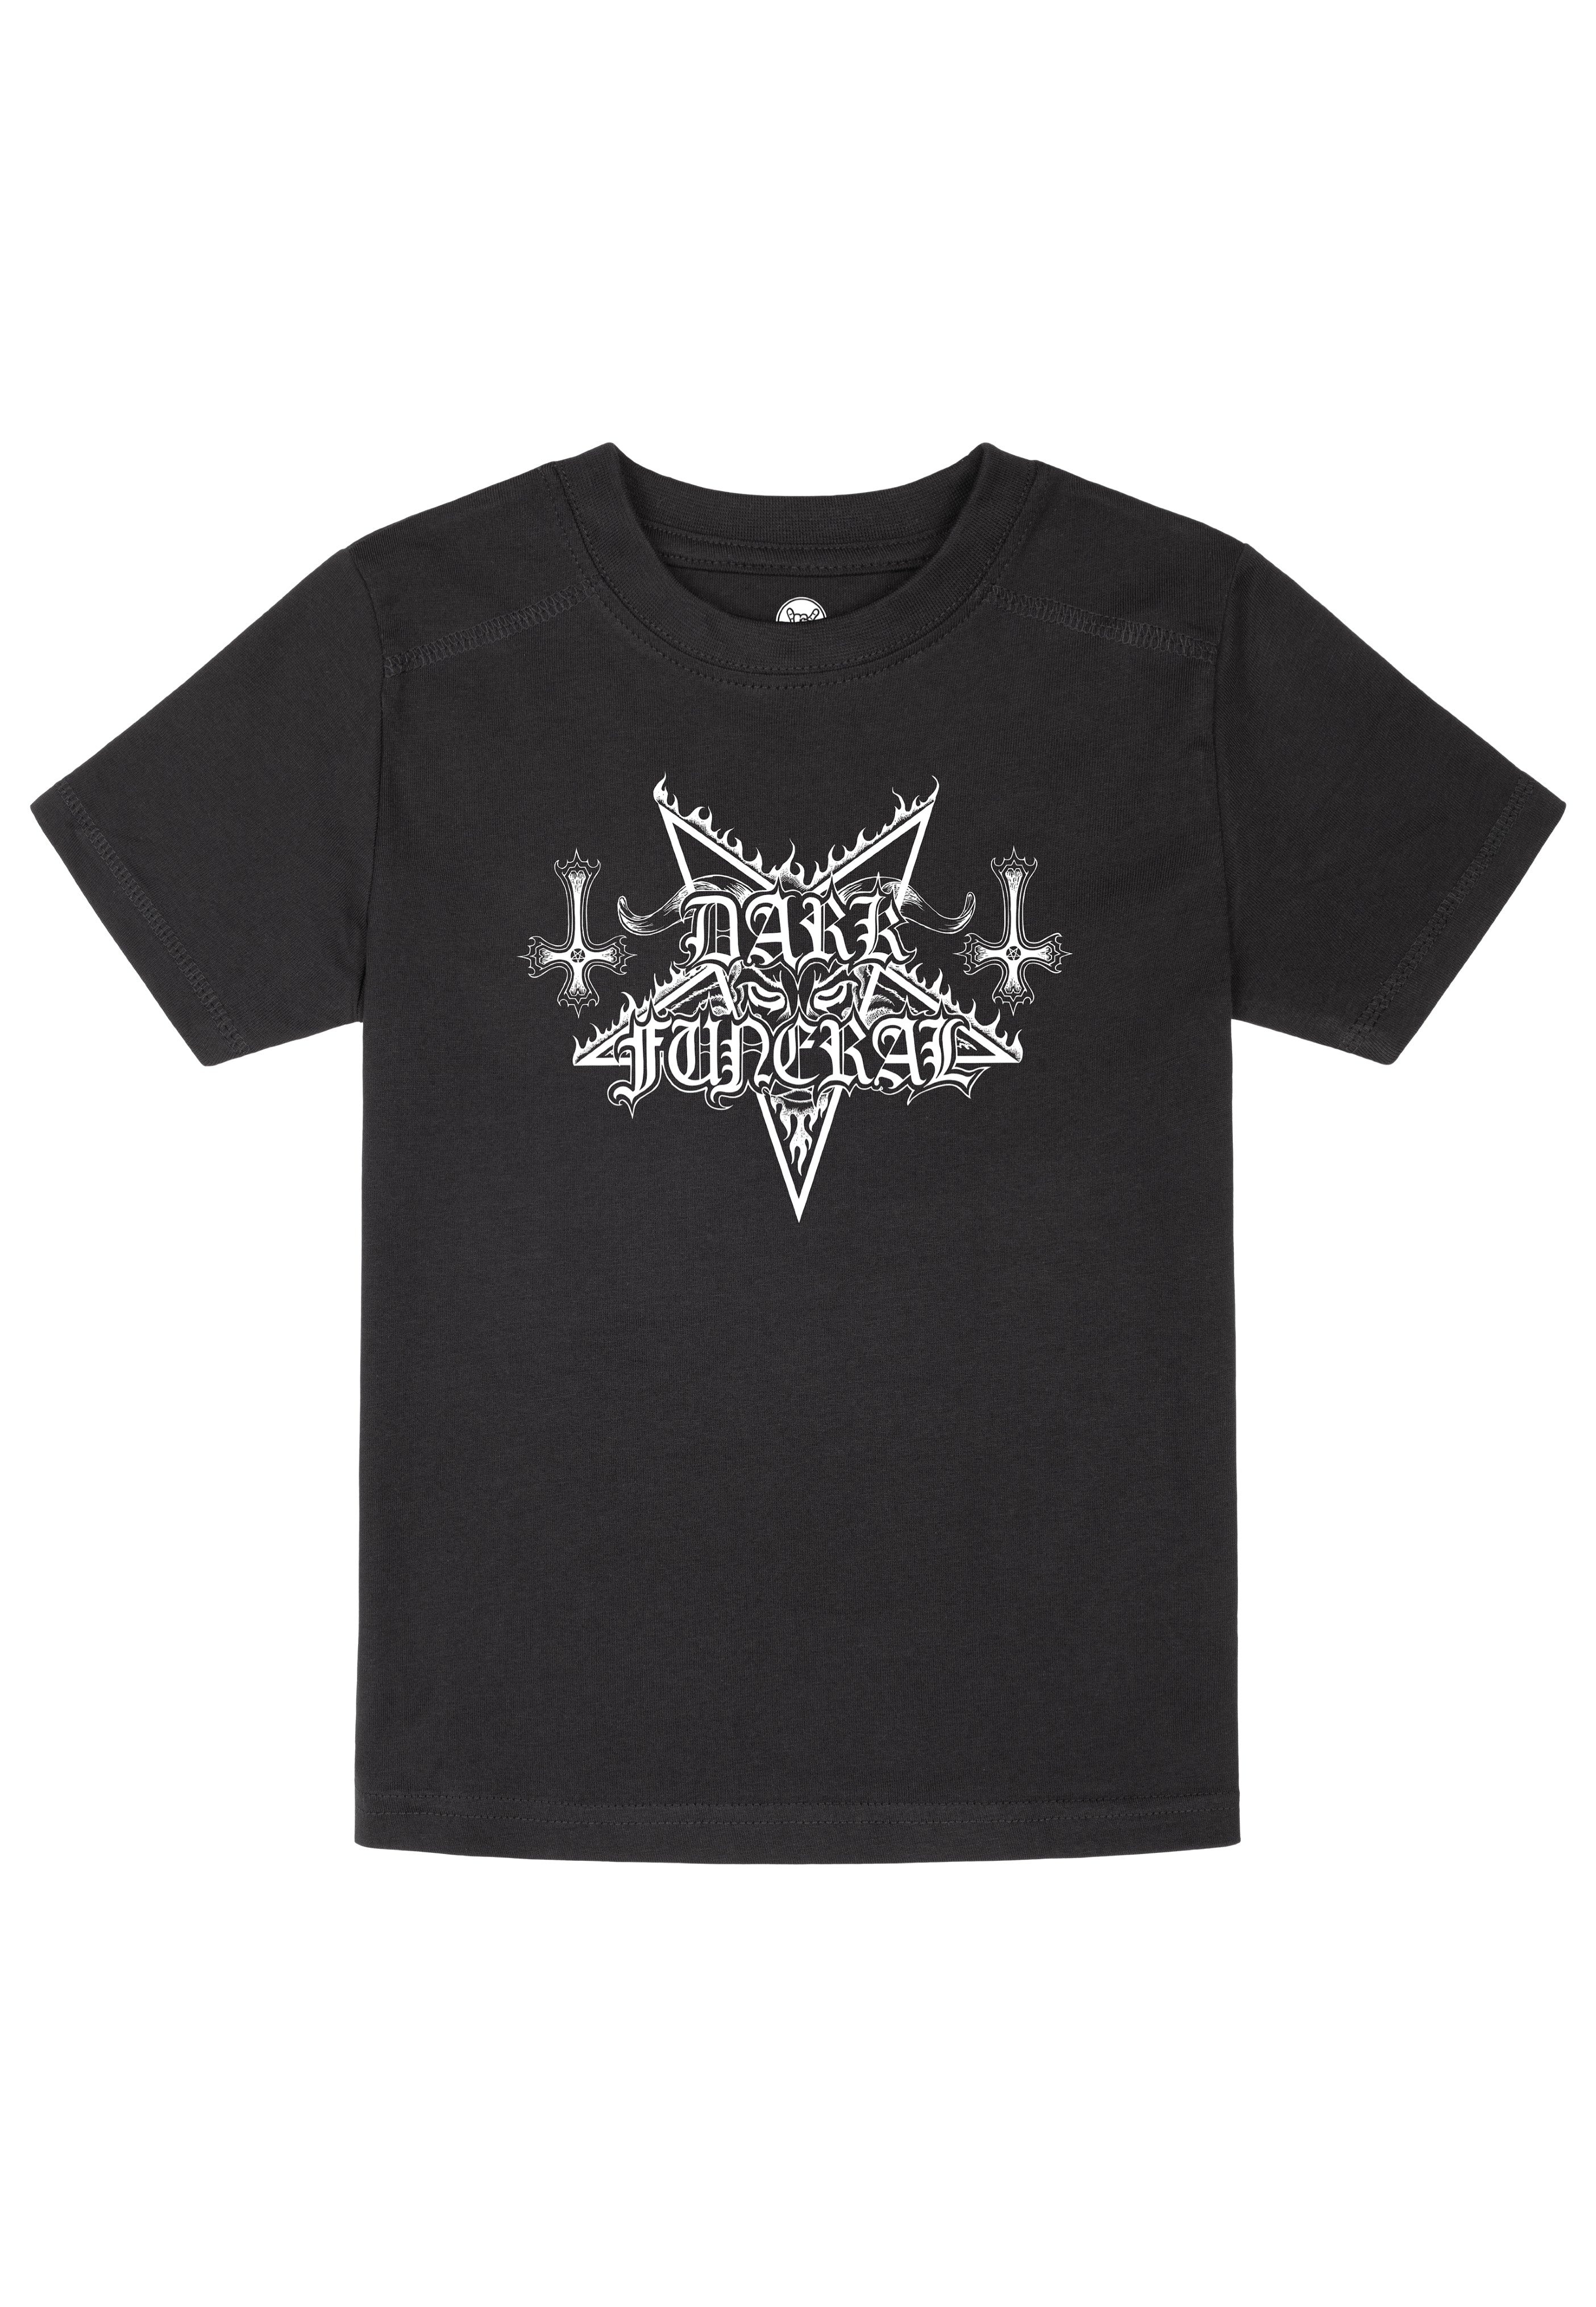 Dark Funeral - Logo Kids Black/White - T-Shirt